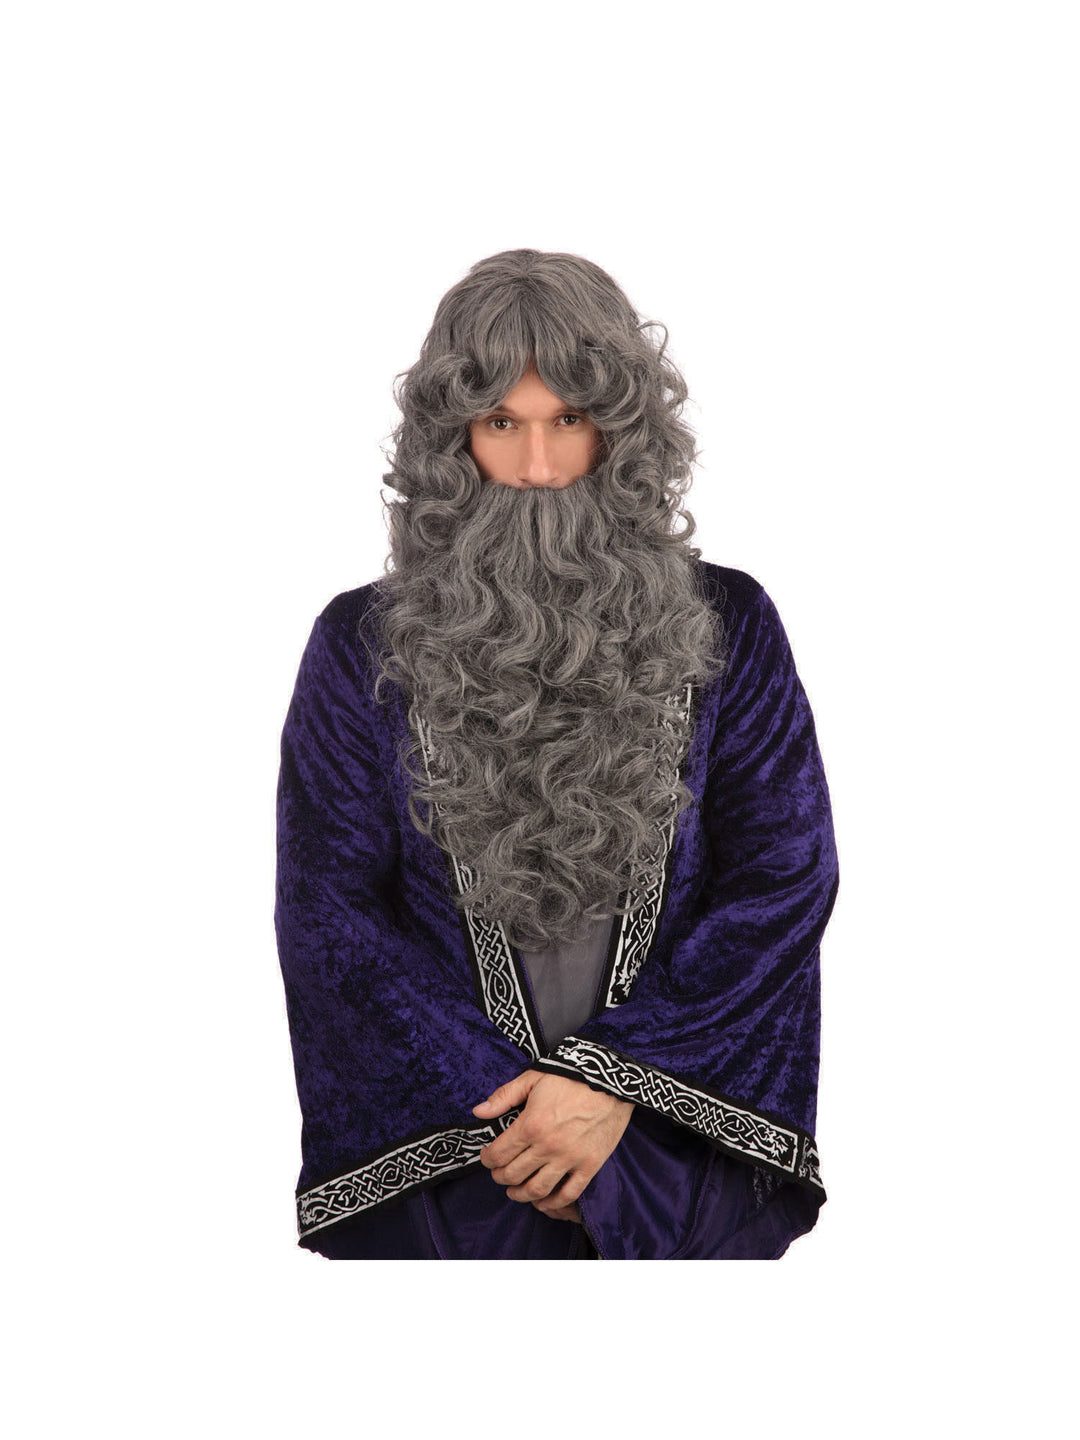 Wizard Wig and Beard Set Grey (Bagged)